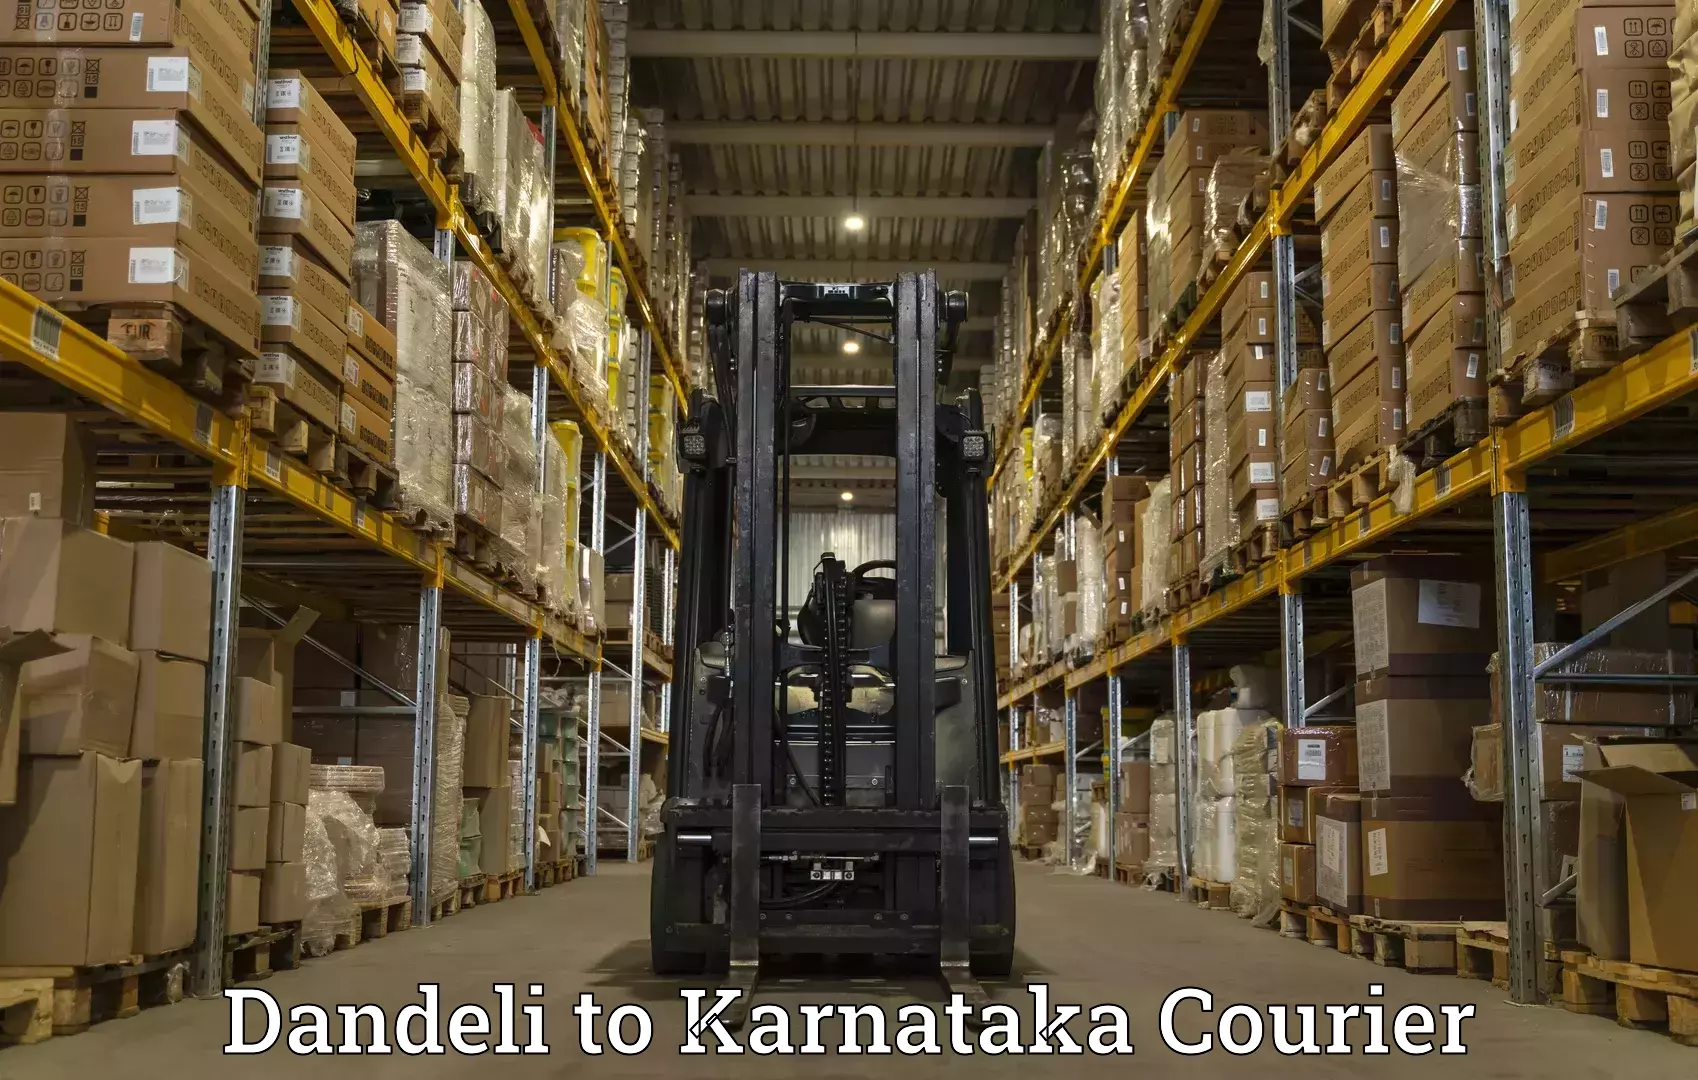 Logistics service provider Dandeli to yedrami